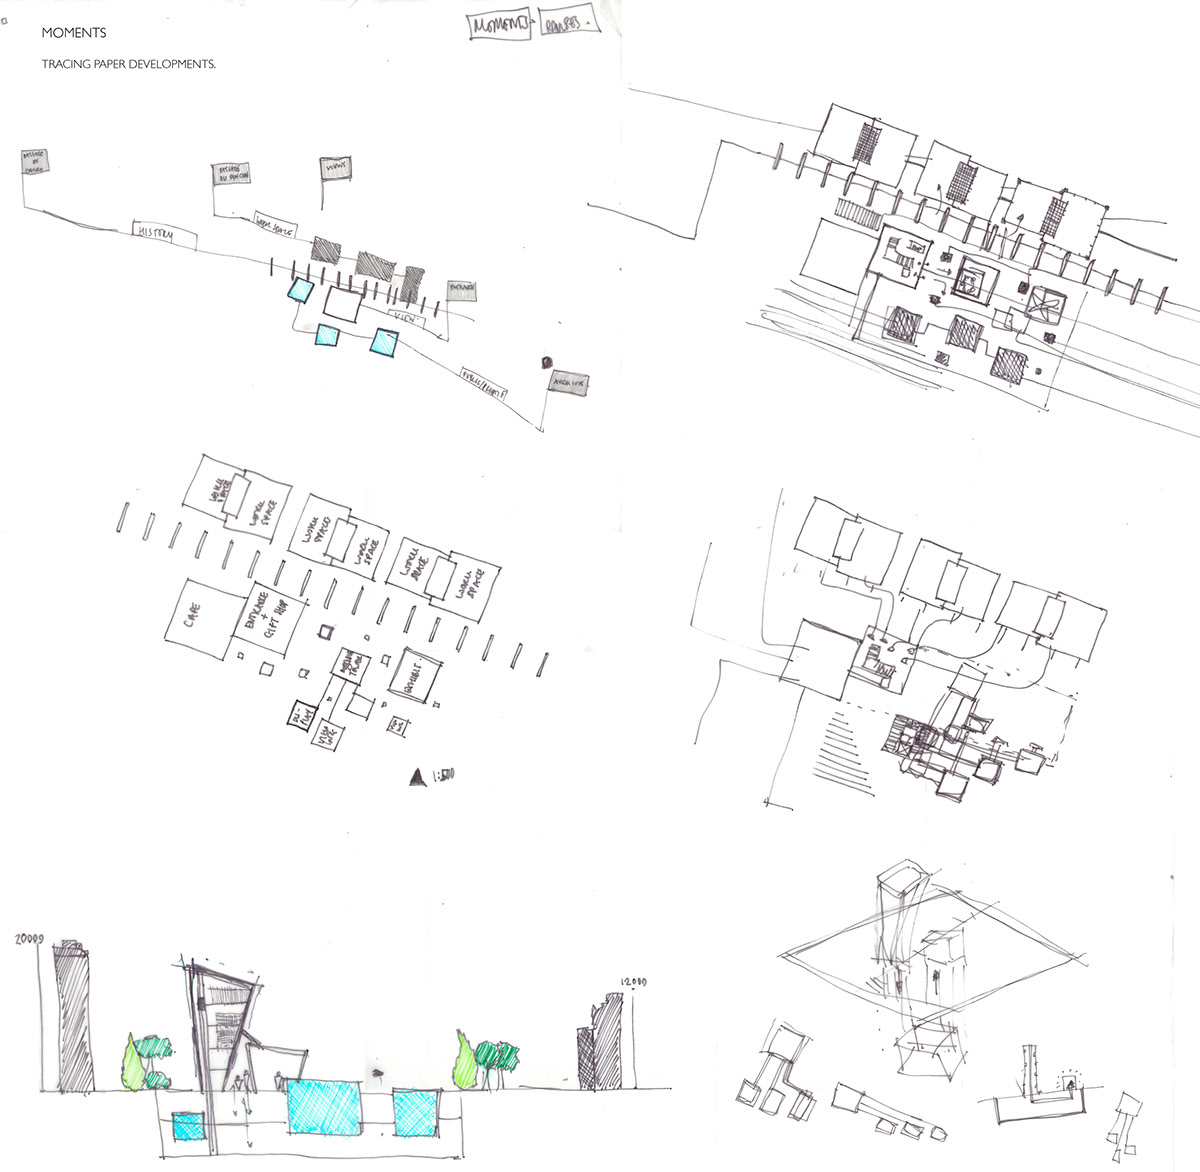 Paris Megacity megacities building design museum Archives Project square Render visuals